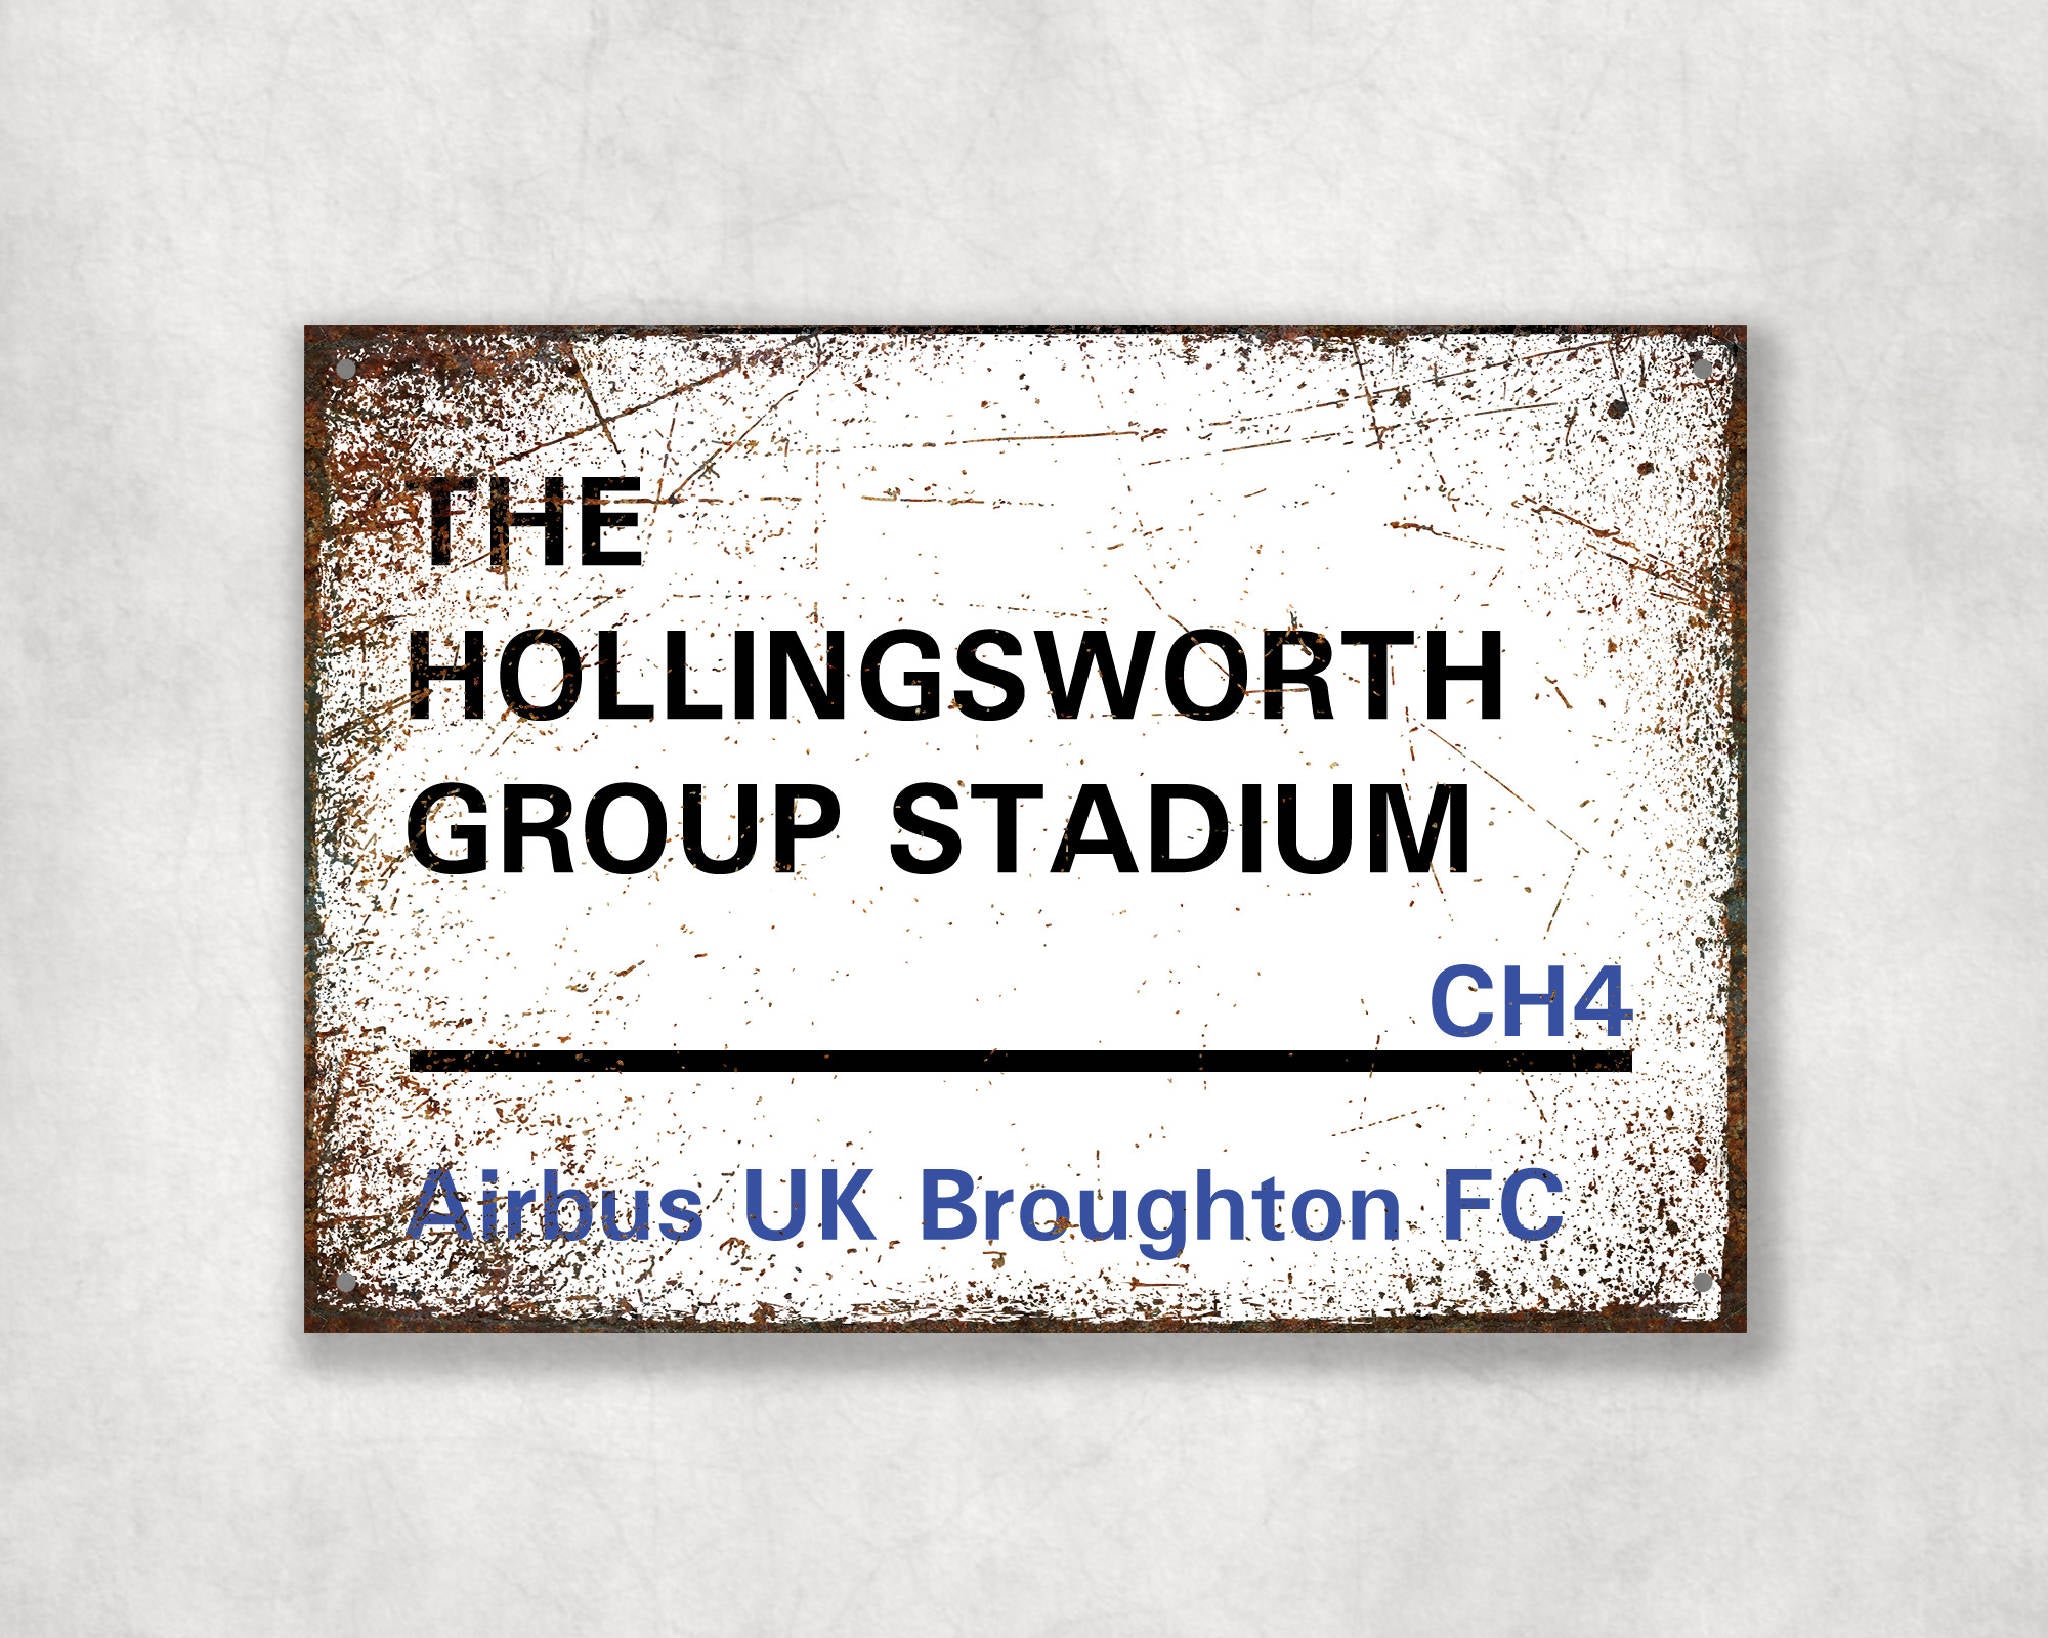 The Hollingsworth Group Stadium - Airbus UK Broughton FC aluminium printed metal street sign - gift, keepsake, football gift